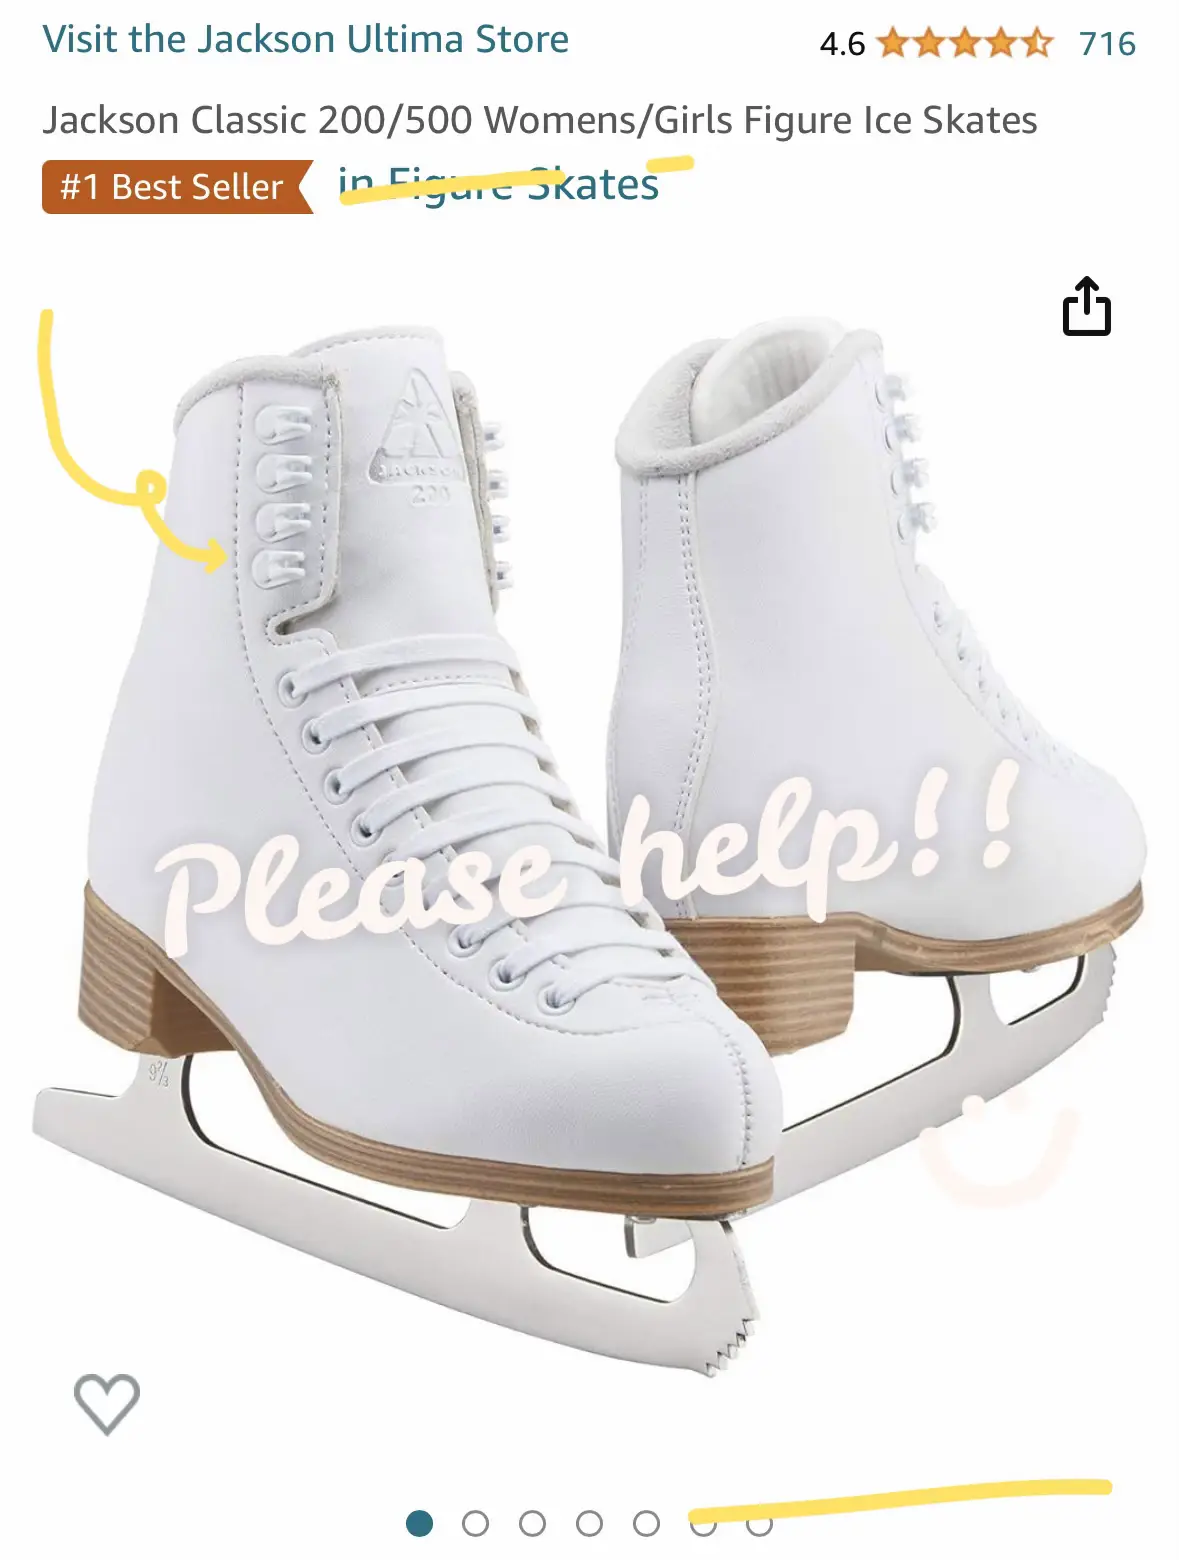 Where to Buy Ice Skates - Lemon8 Search